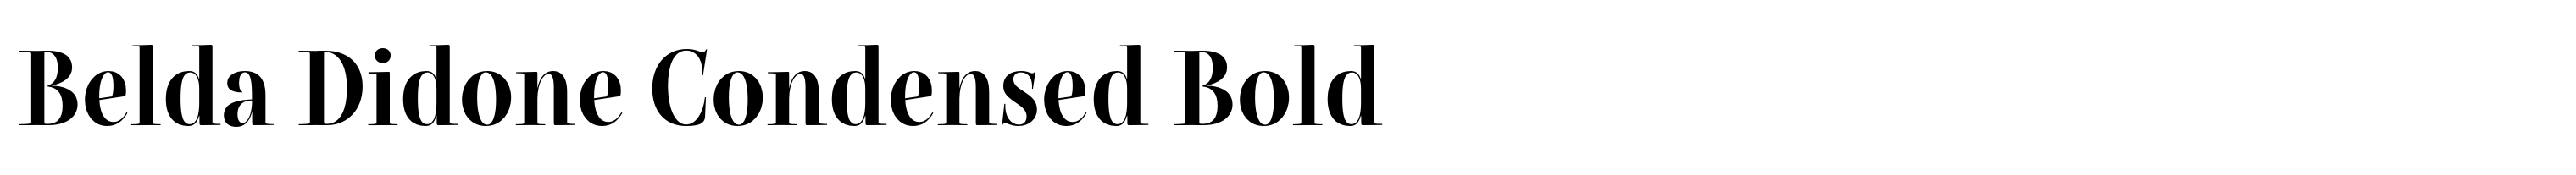 Belda Didone Condensed Bold